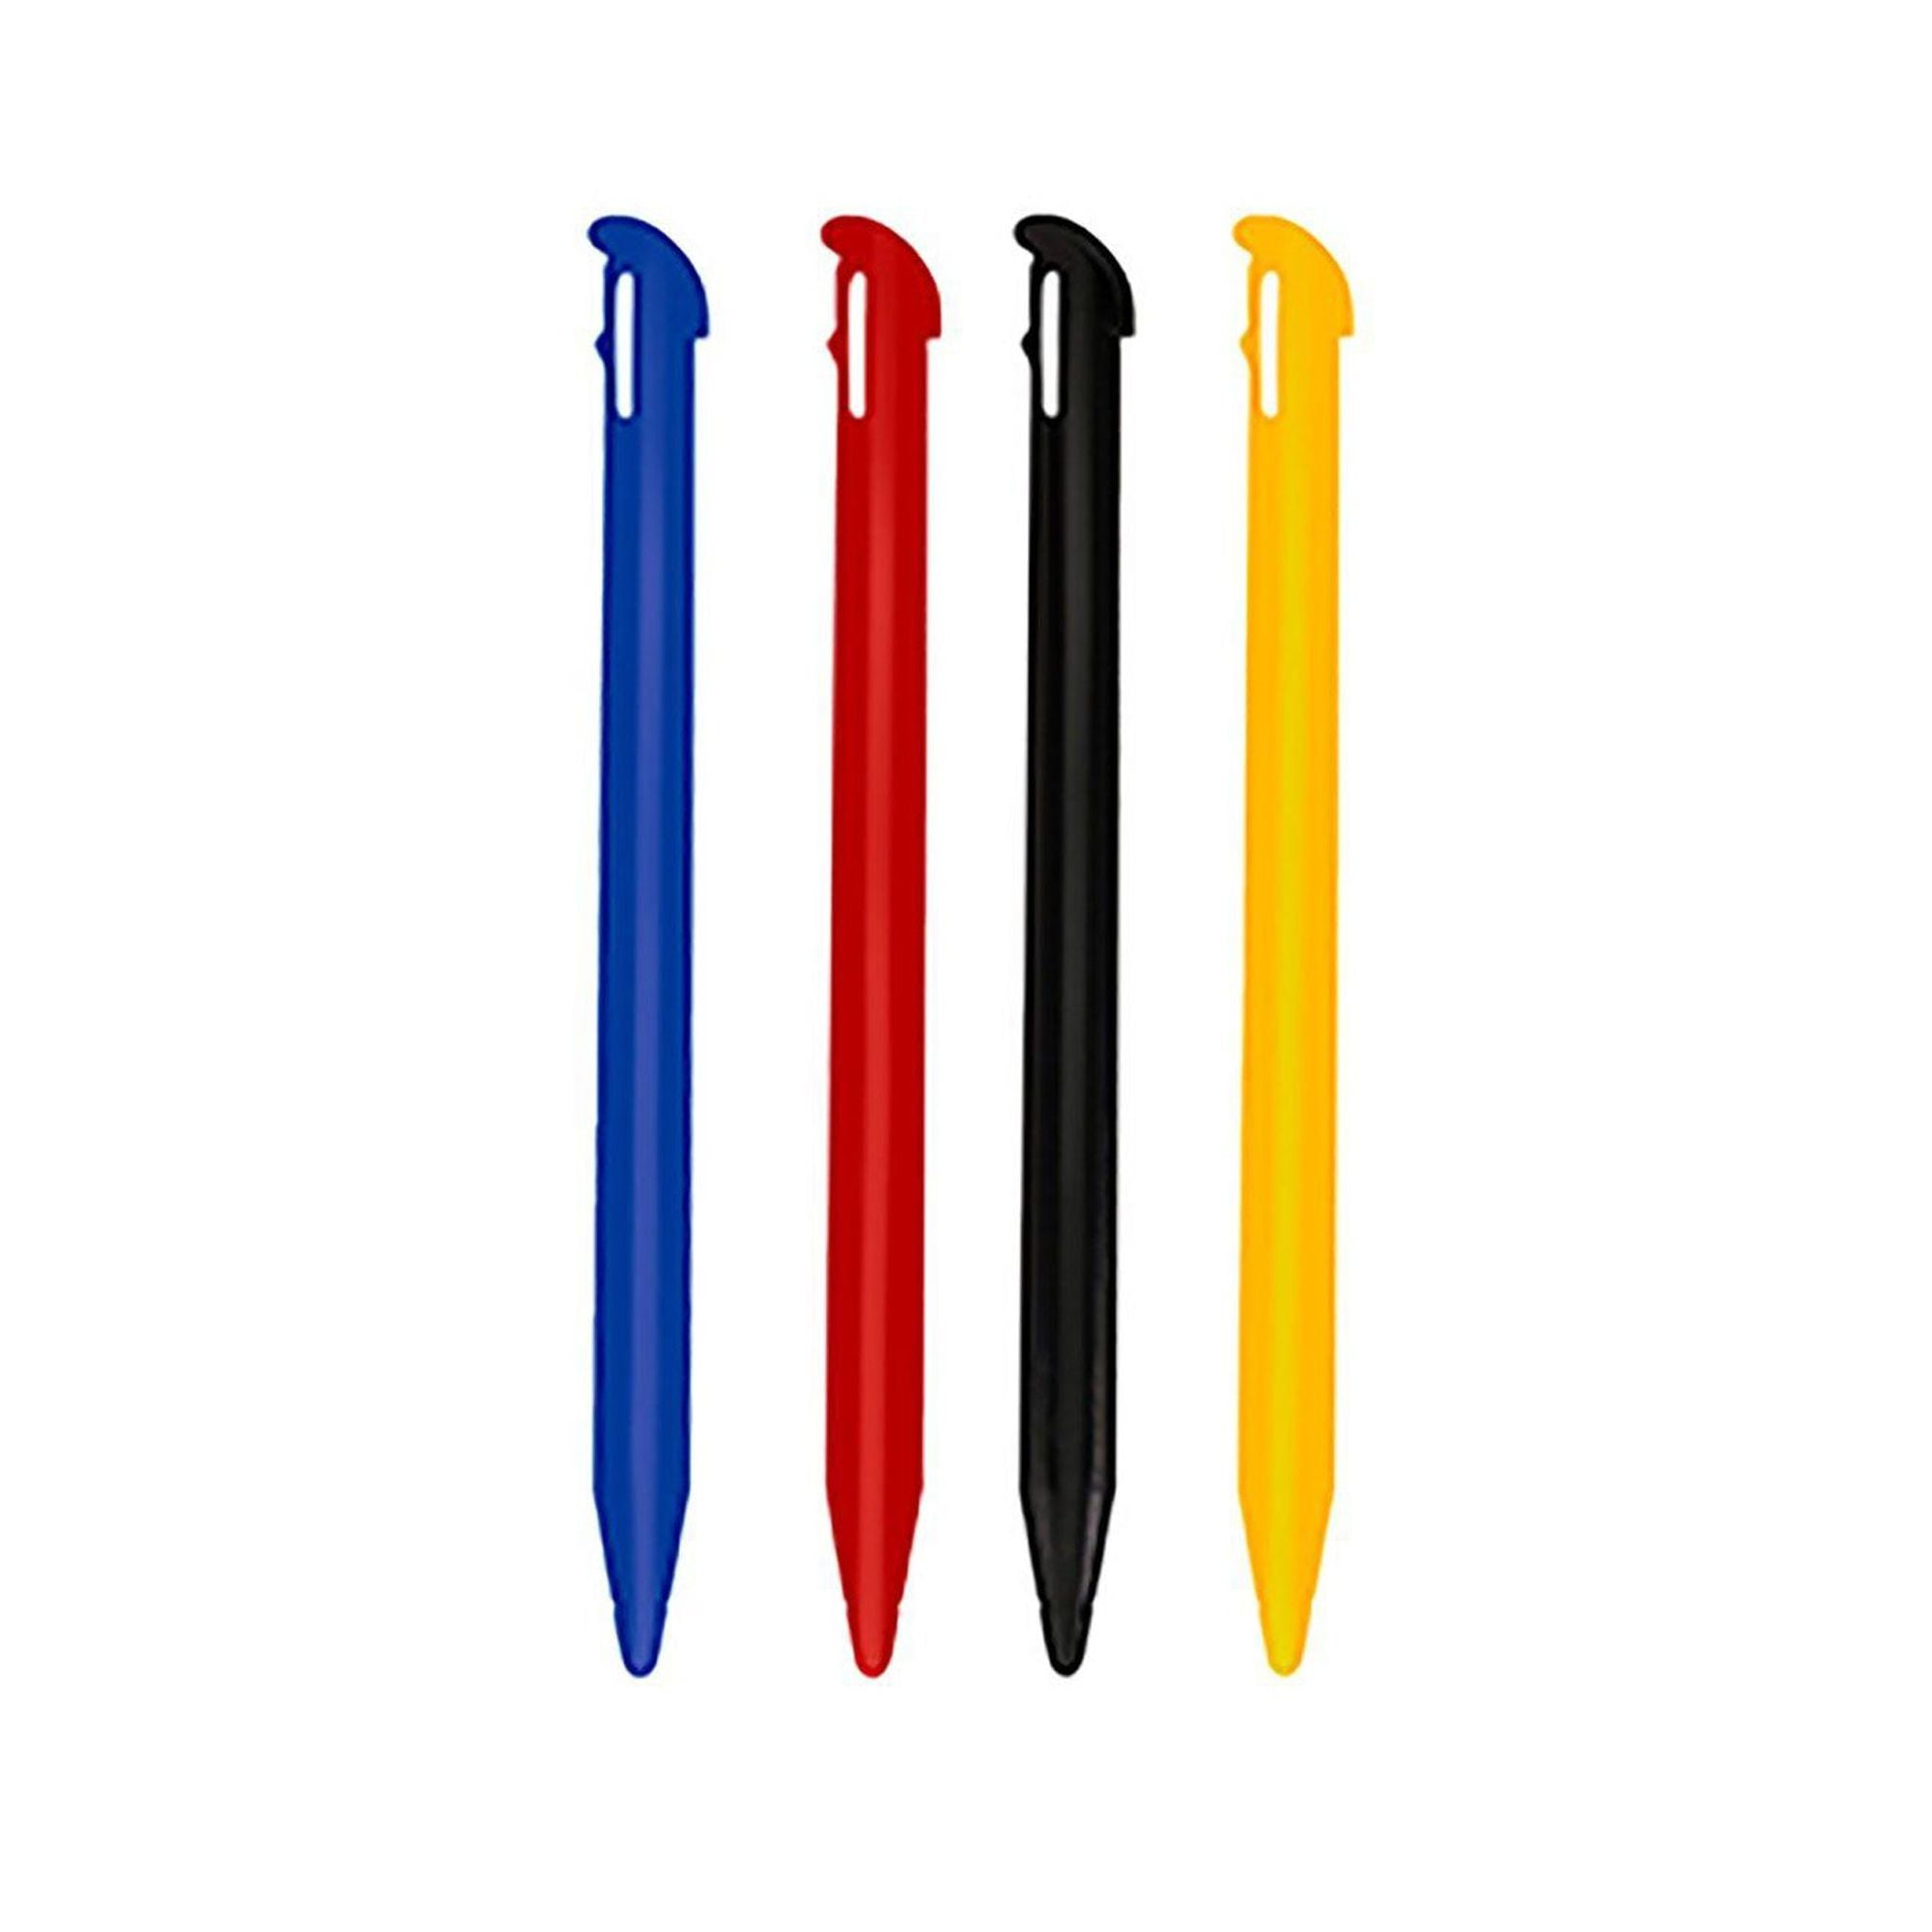 For Nintendo New 3ds Xl 4 Stylus Pens Pack Kmd Black Red Blue Pen Styluses Set Walmart Com Walmart Com